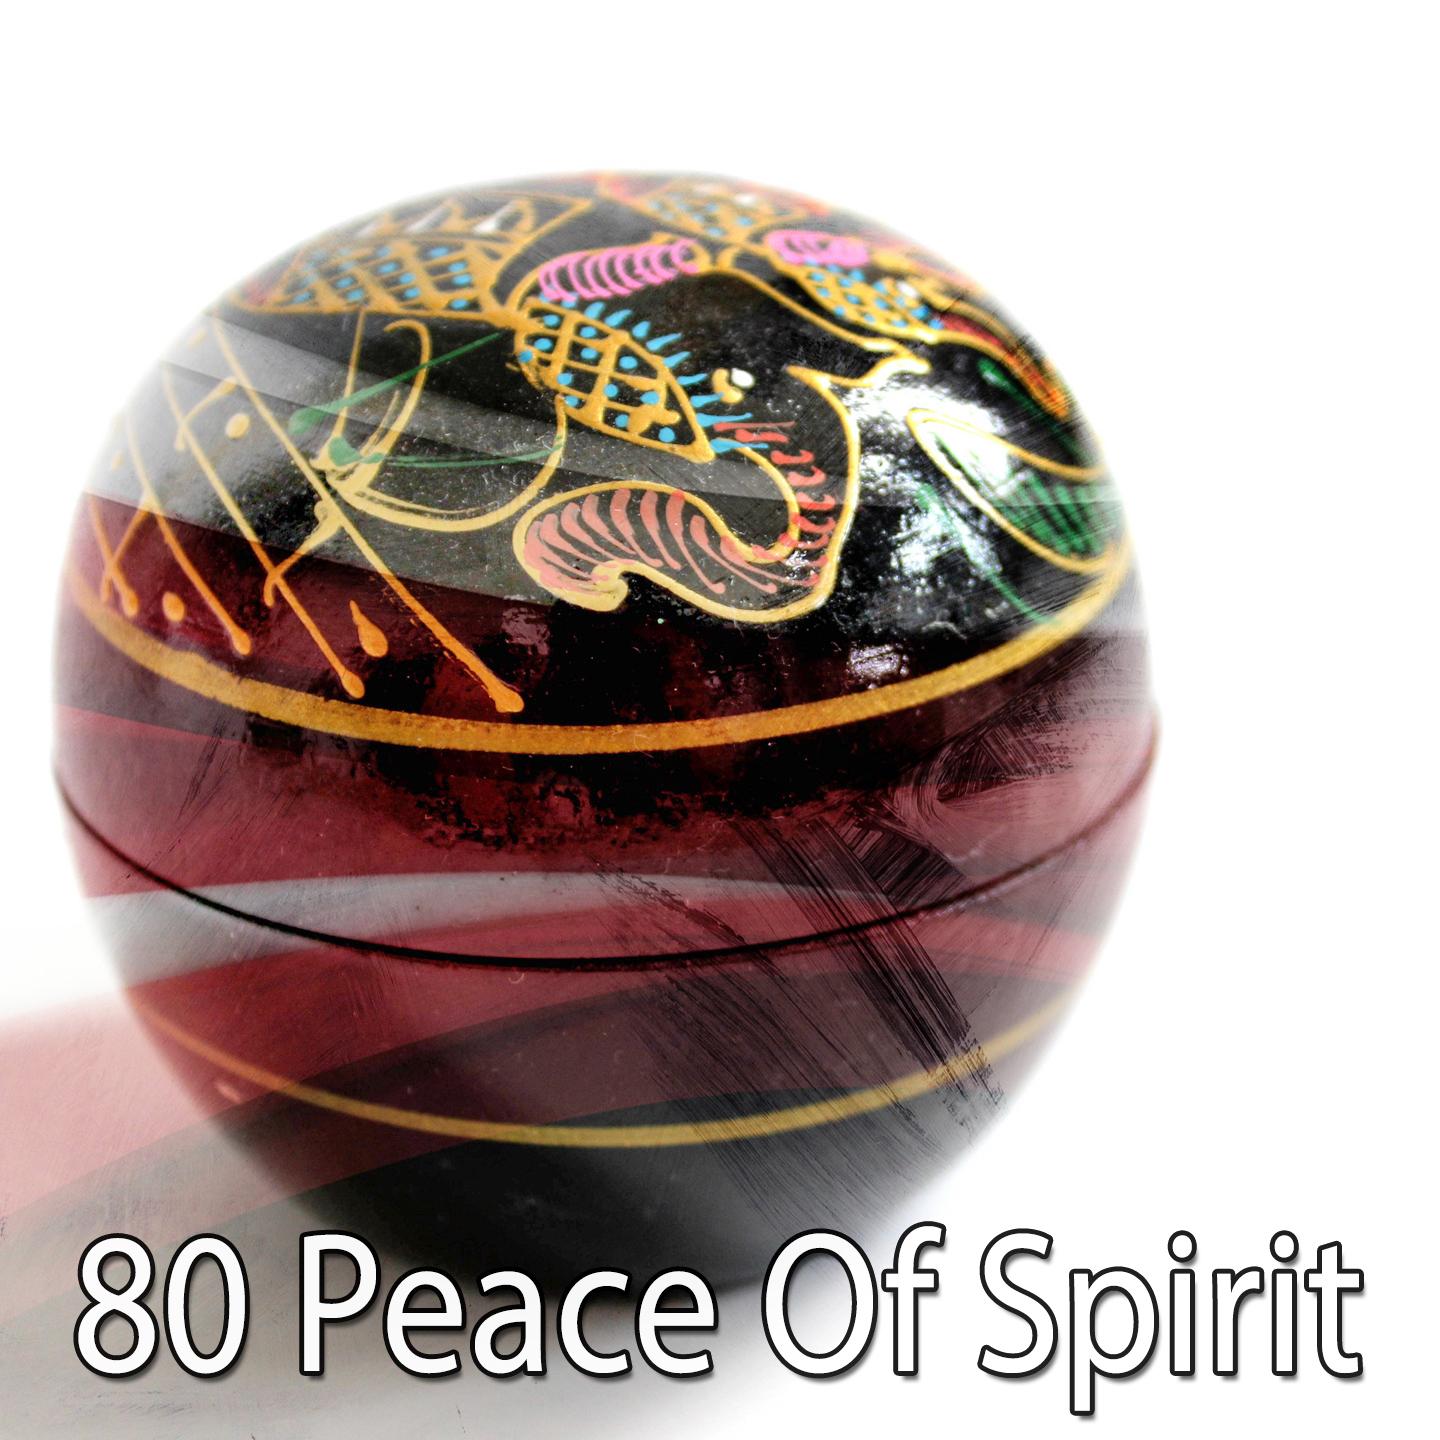 80 Peace of Spirit